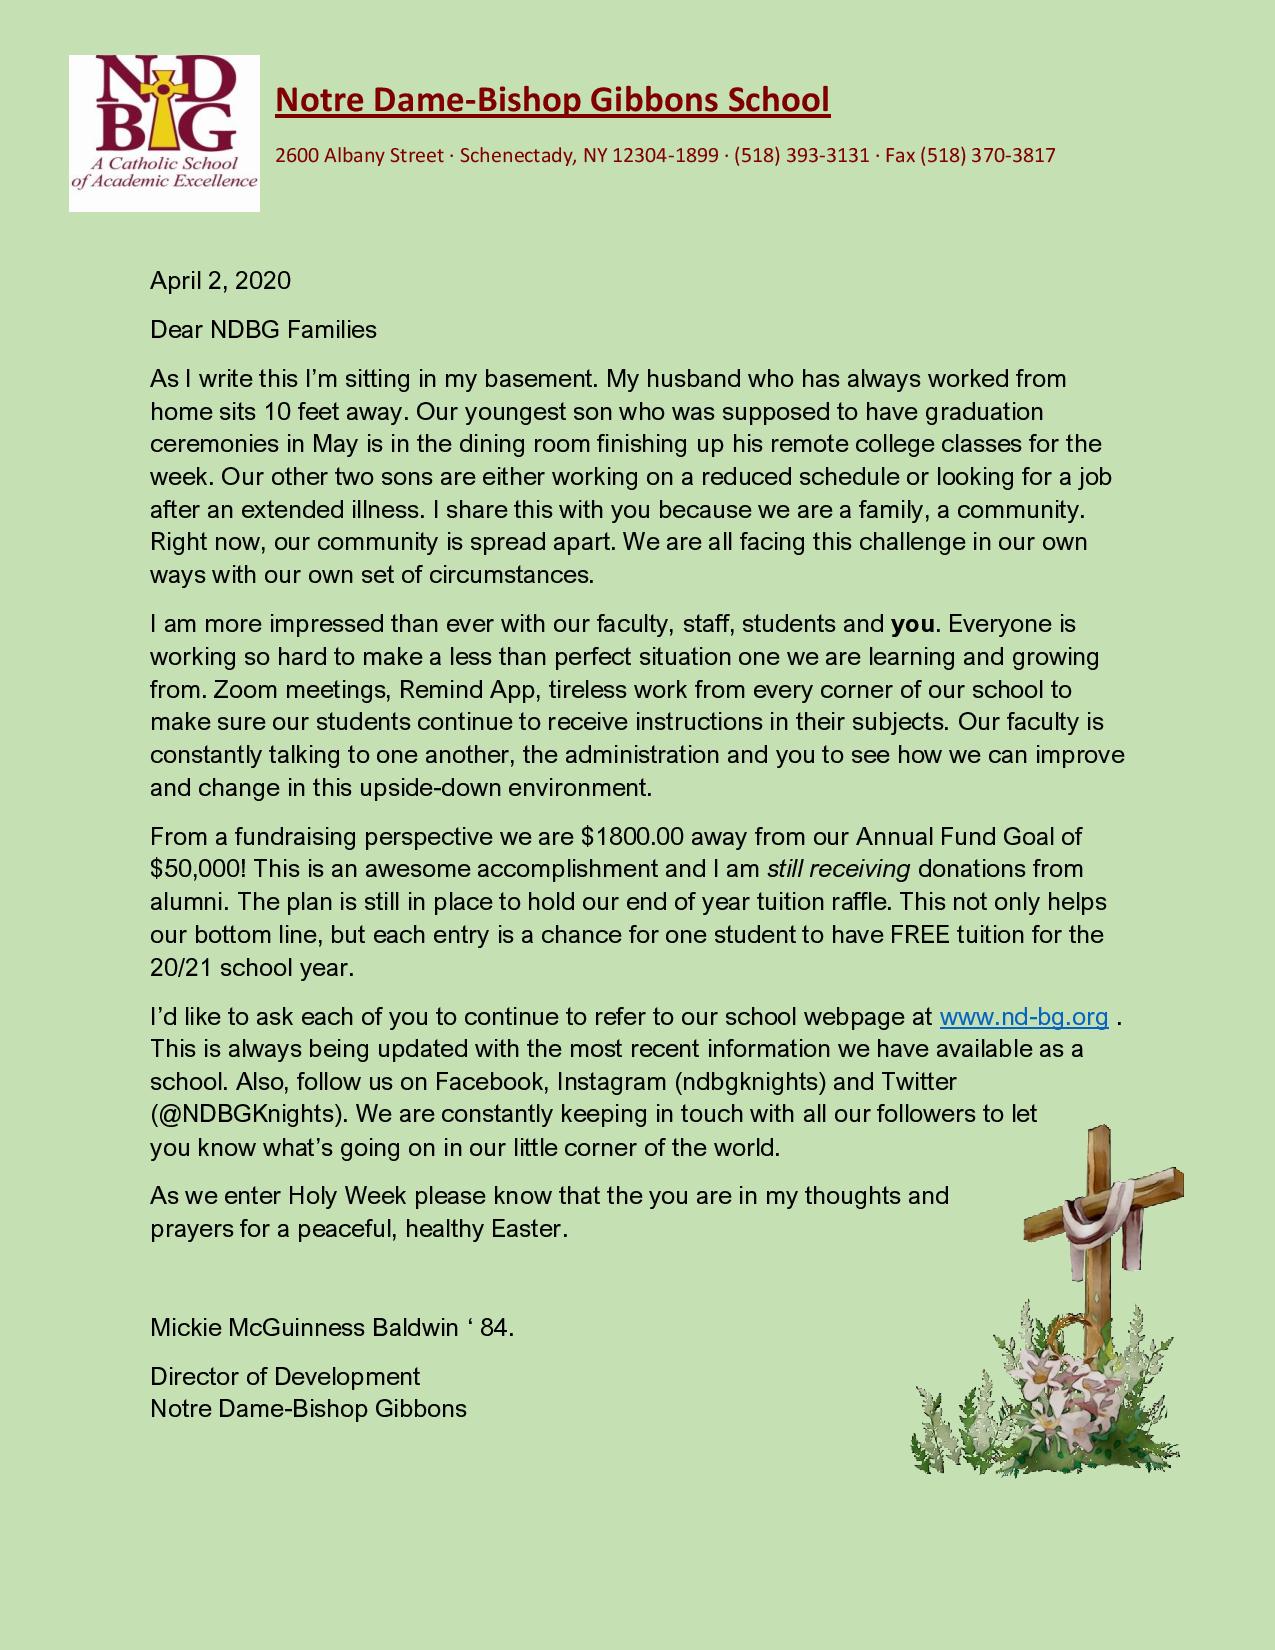 April Letter to Families